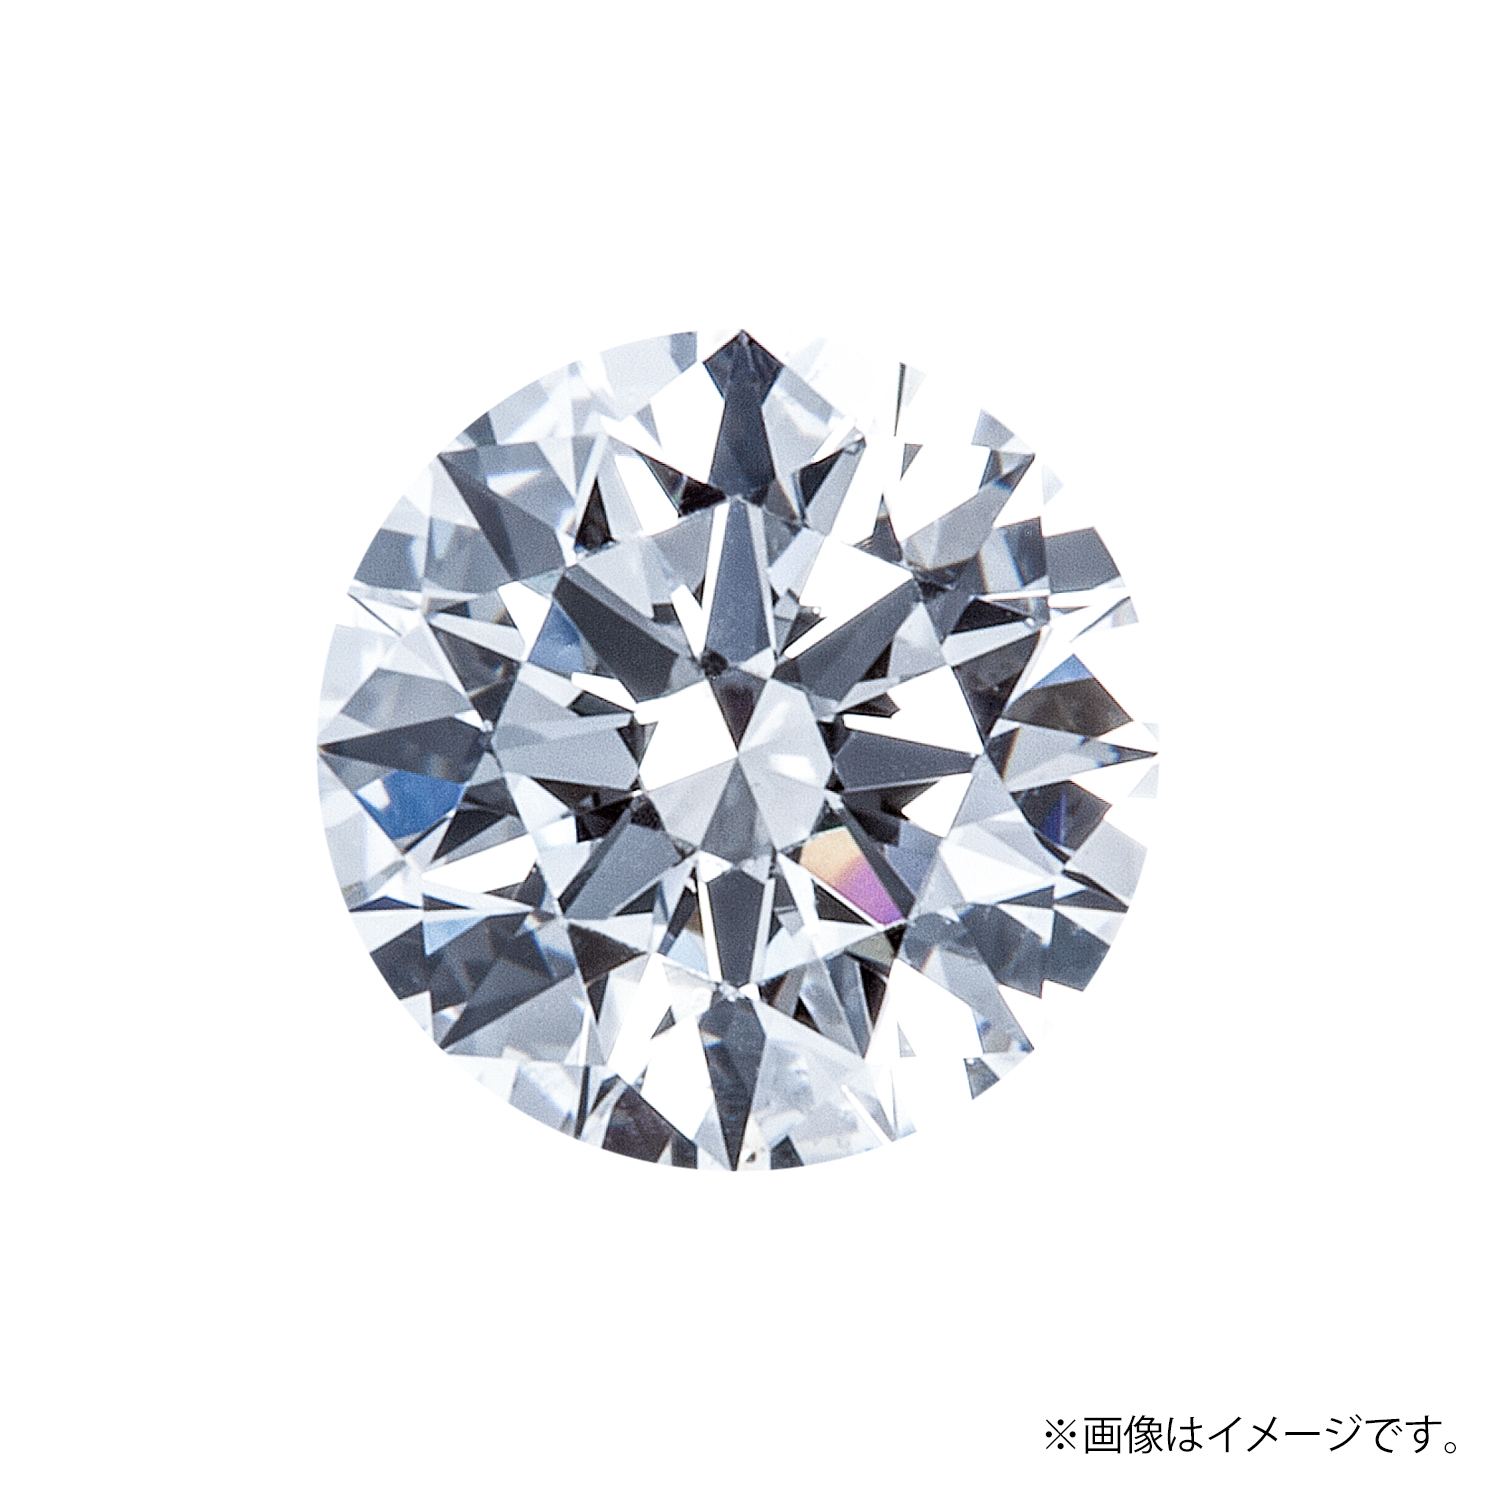 0.167ct Round ダイヤモンド / E / VVS1 / 3EX H&C